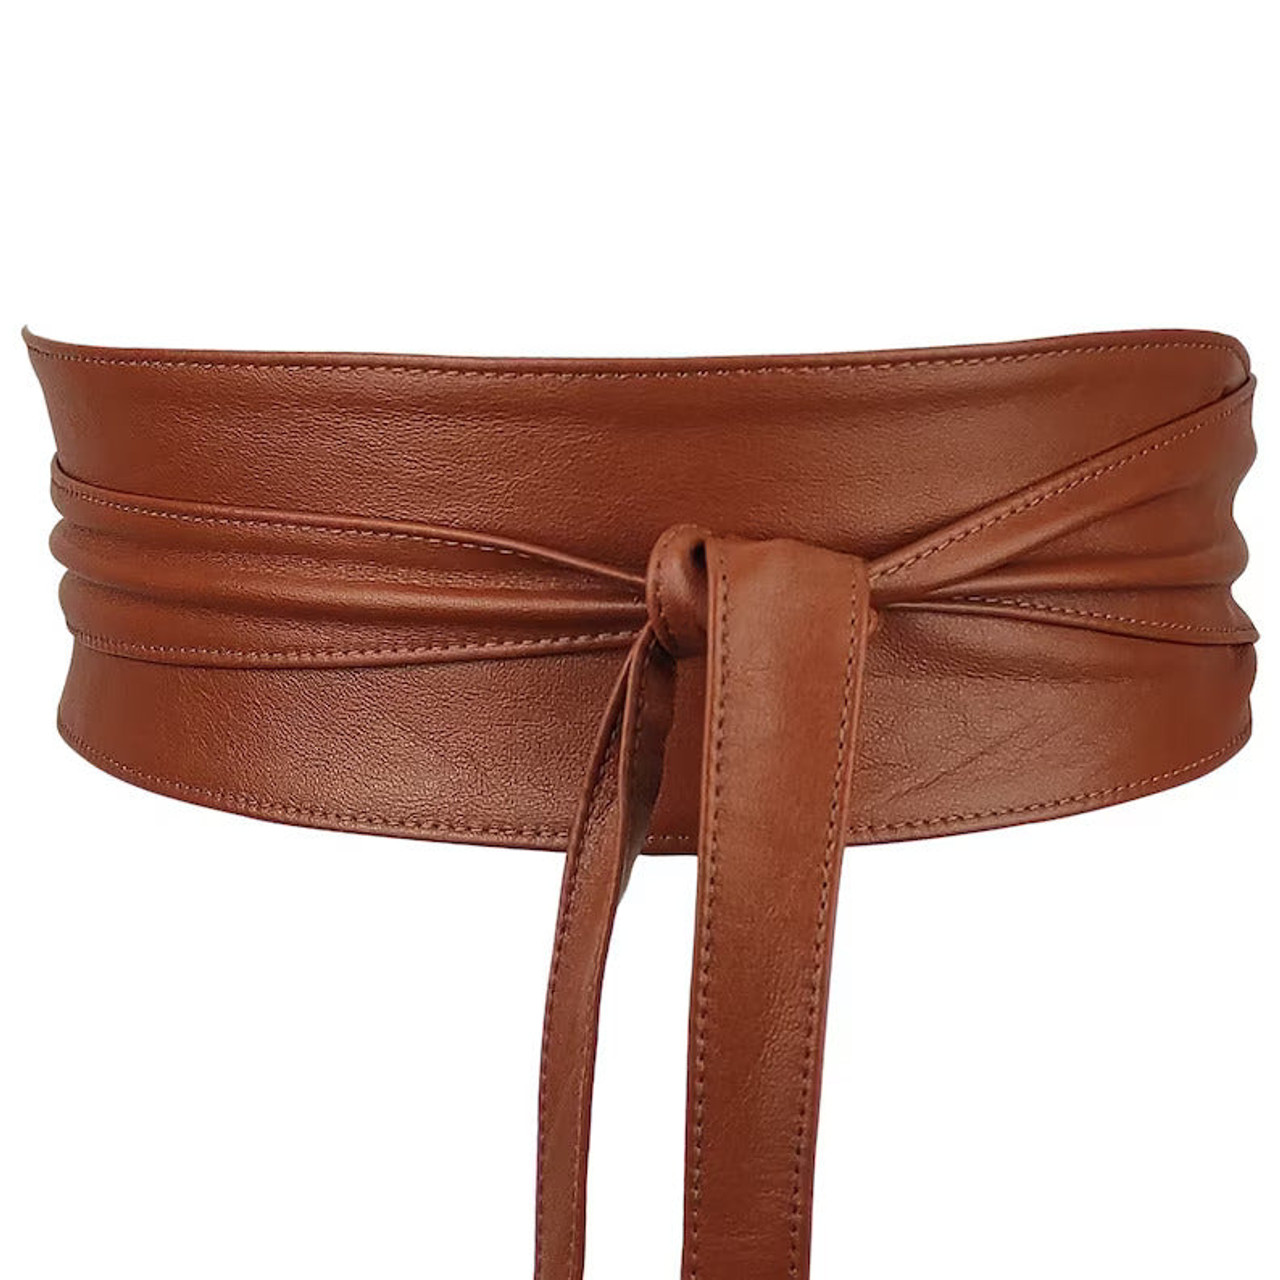 Leather wrap belt Obi belt for women Wide Waist Band Handmade